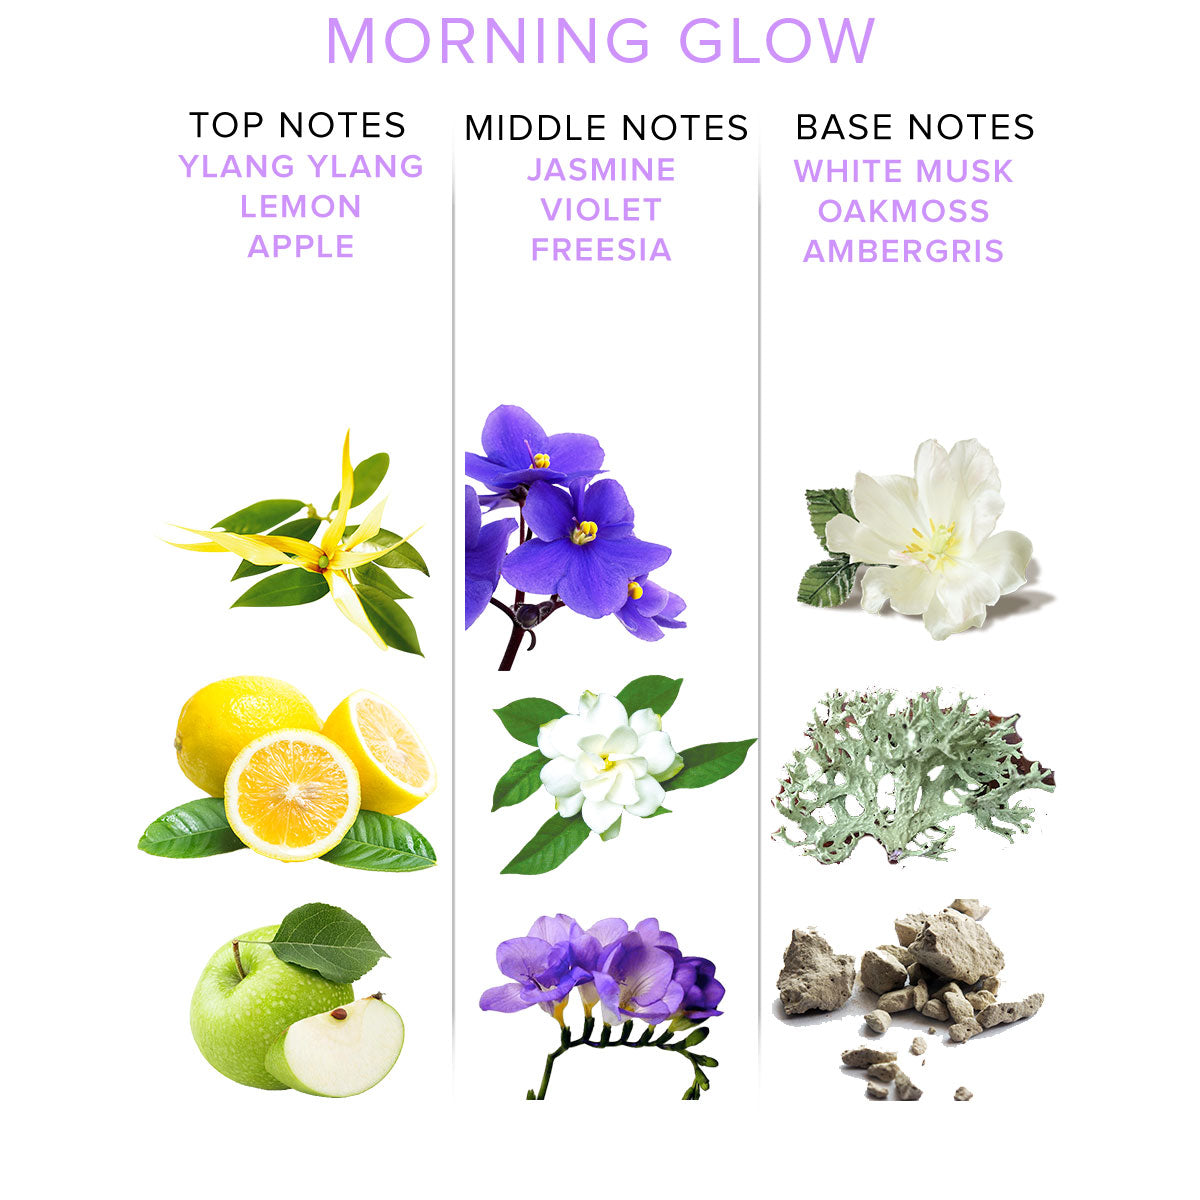 Eye of Love Pheromone Parfum 10ml – Morning Glow (F to M)